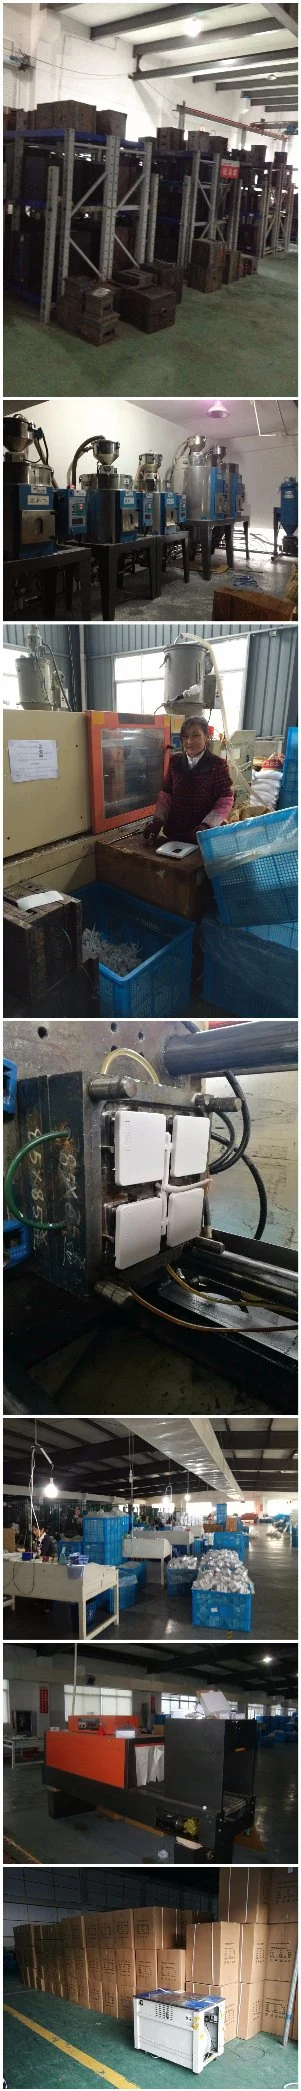 Plastic Waterproof Distribution Box Electrical Box Distribution Board IP65 Hc-Ht 15ways